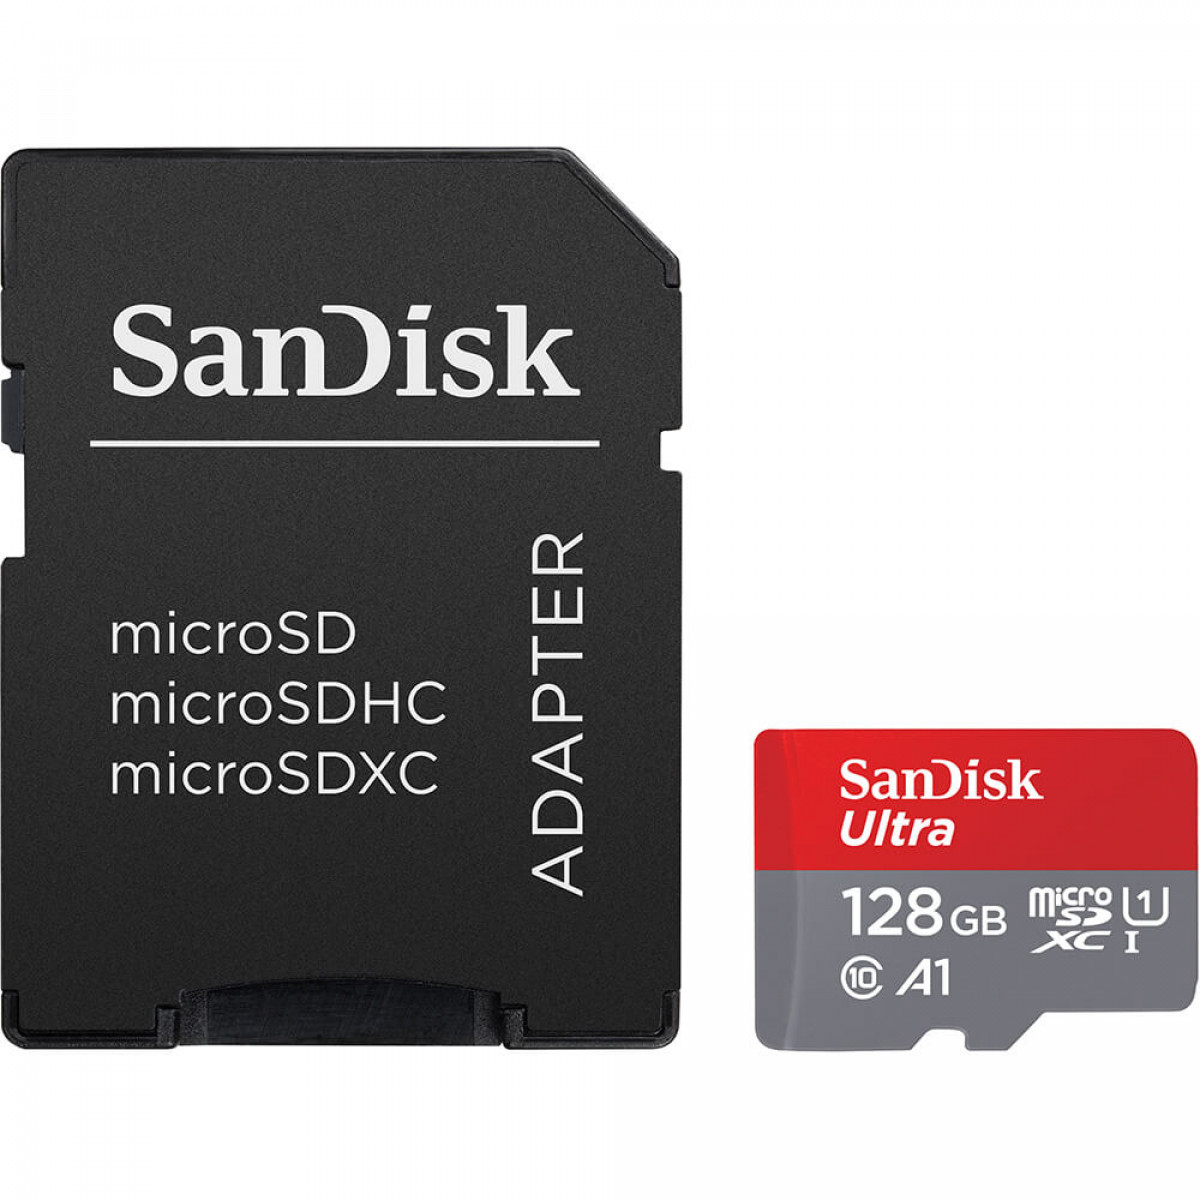 SANDISK 257895, Micro-SDXC MB/s 140 GB, 128 Speicherkarte